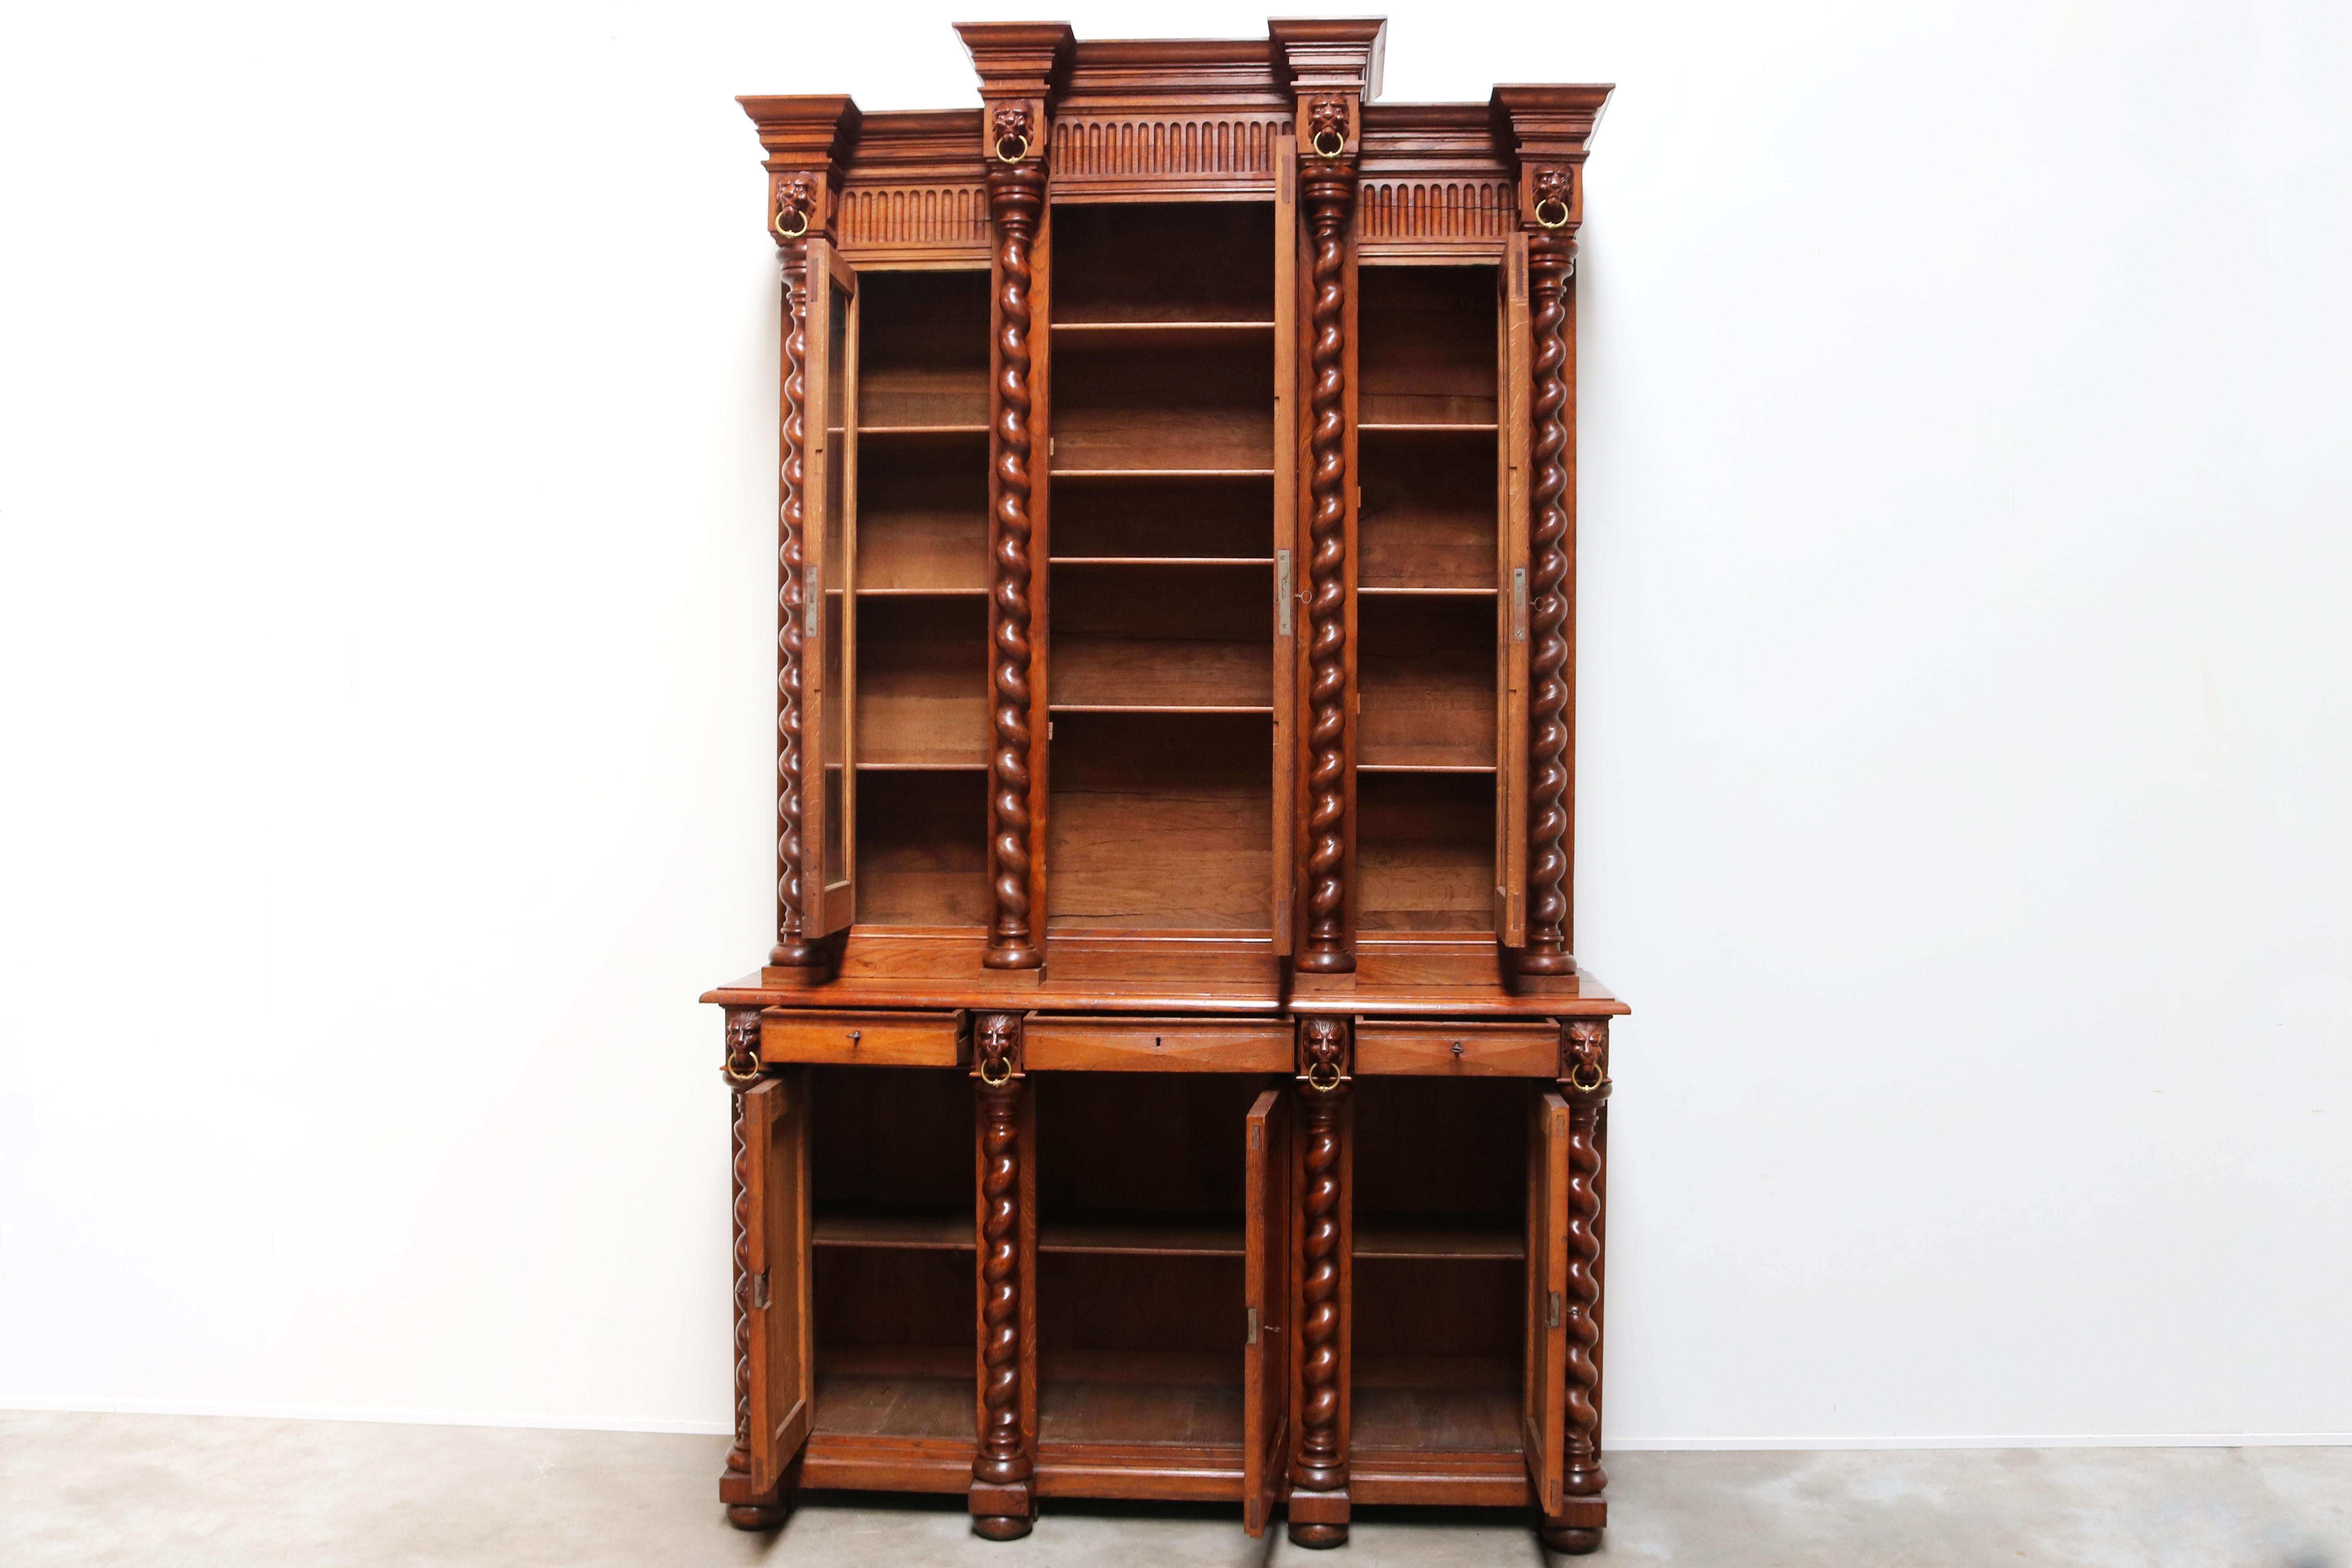 Large Antique French Renaissance Bookcase Cabinet 19th Century Barley Twist Oak For Sale 7